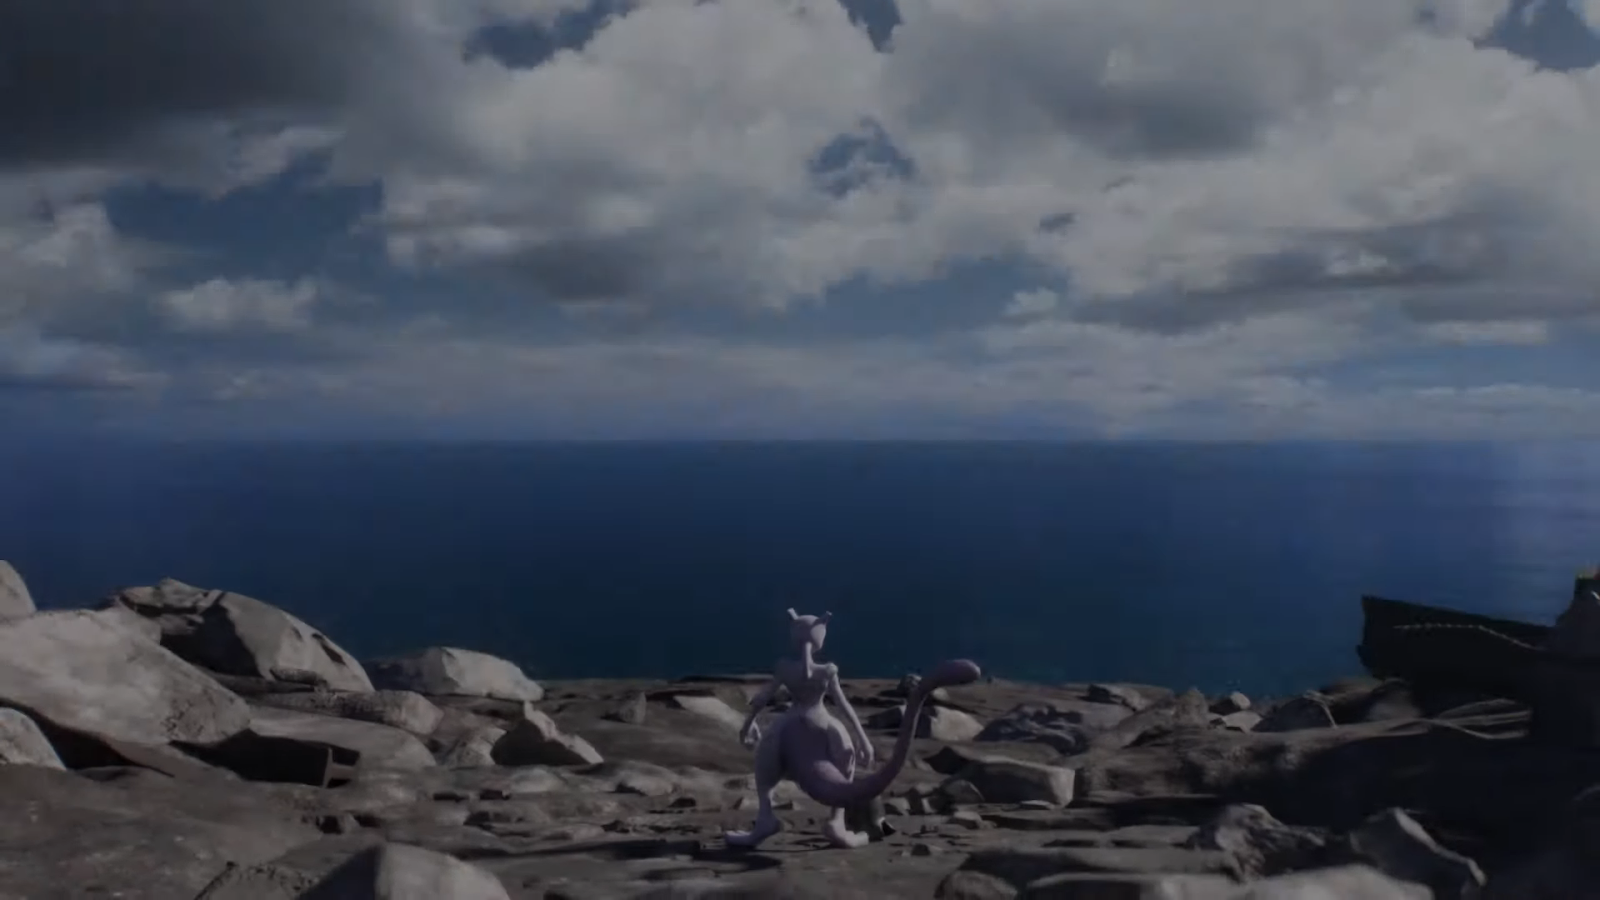 Mewtwo Returns Screenshots Wallpapers